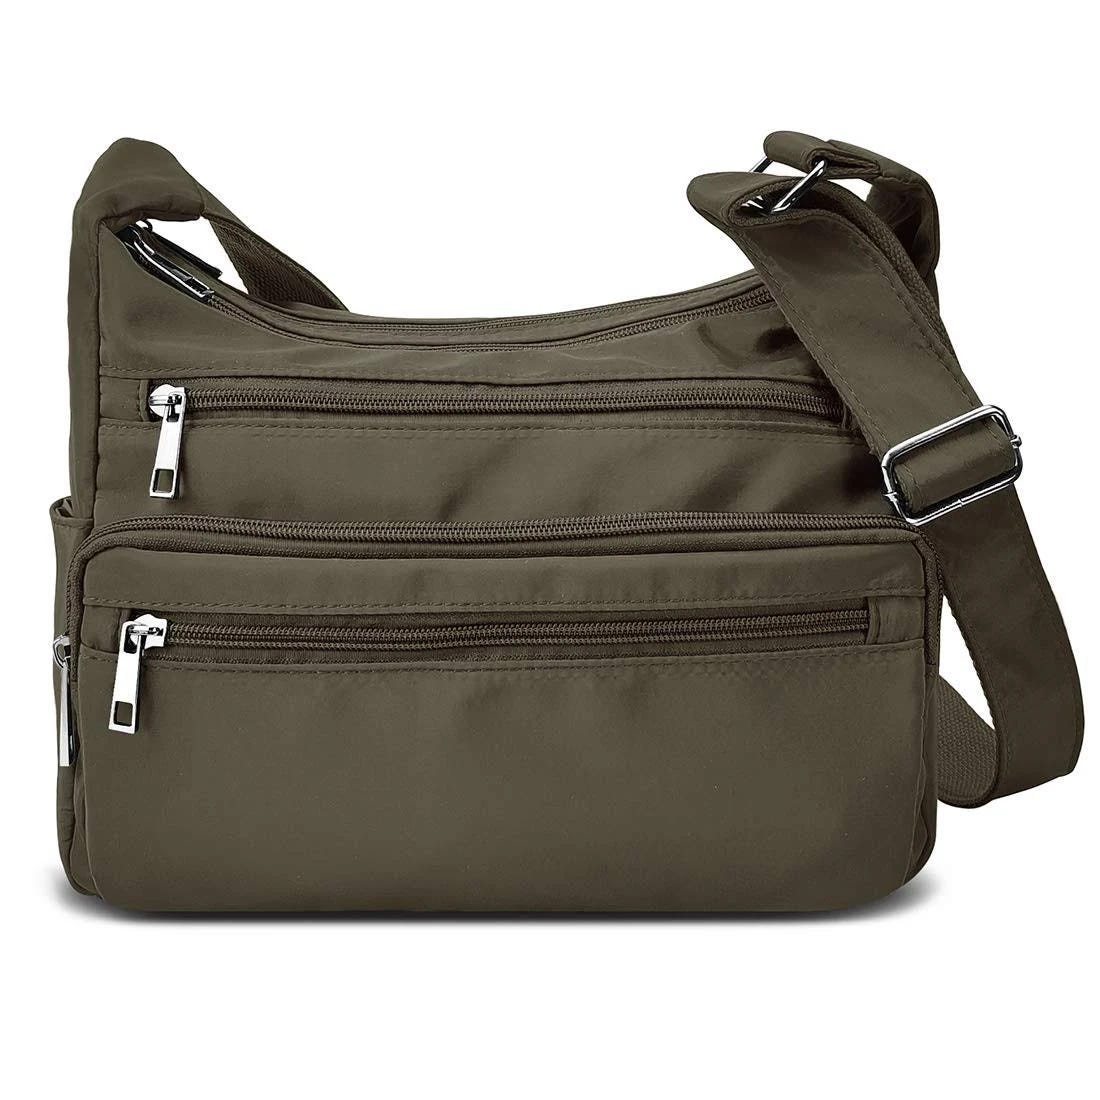 Chic Multifunctional Nylon Shoulder Bag with Organized Storage | Image